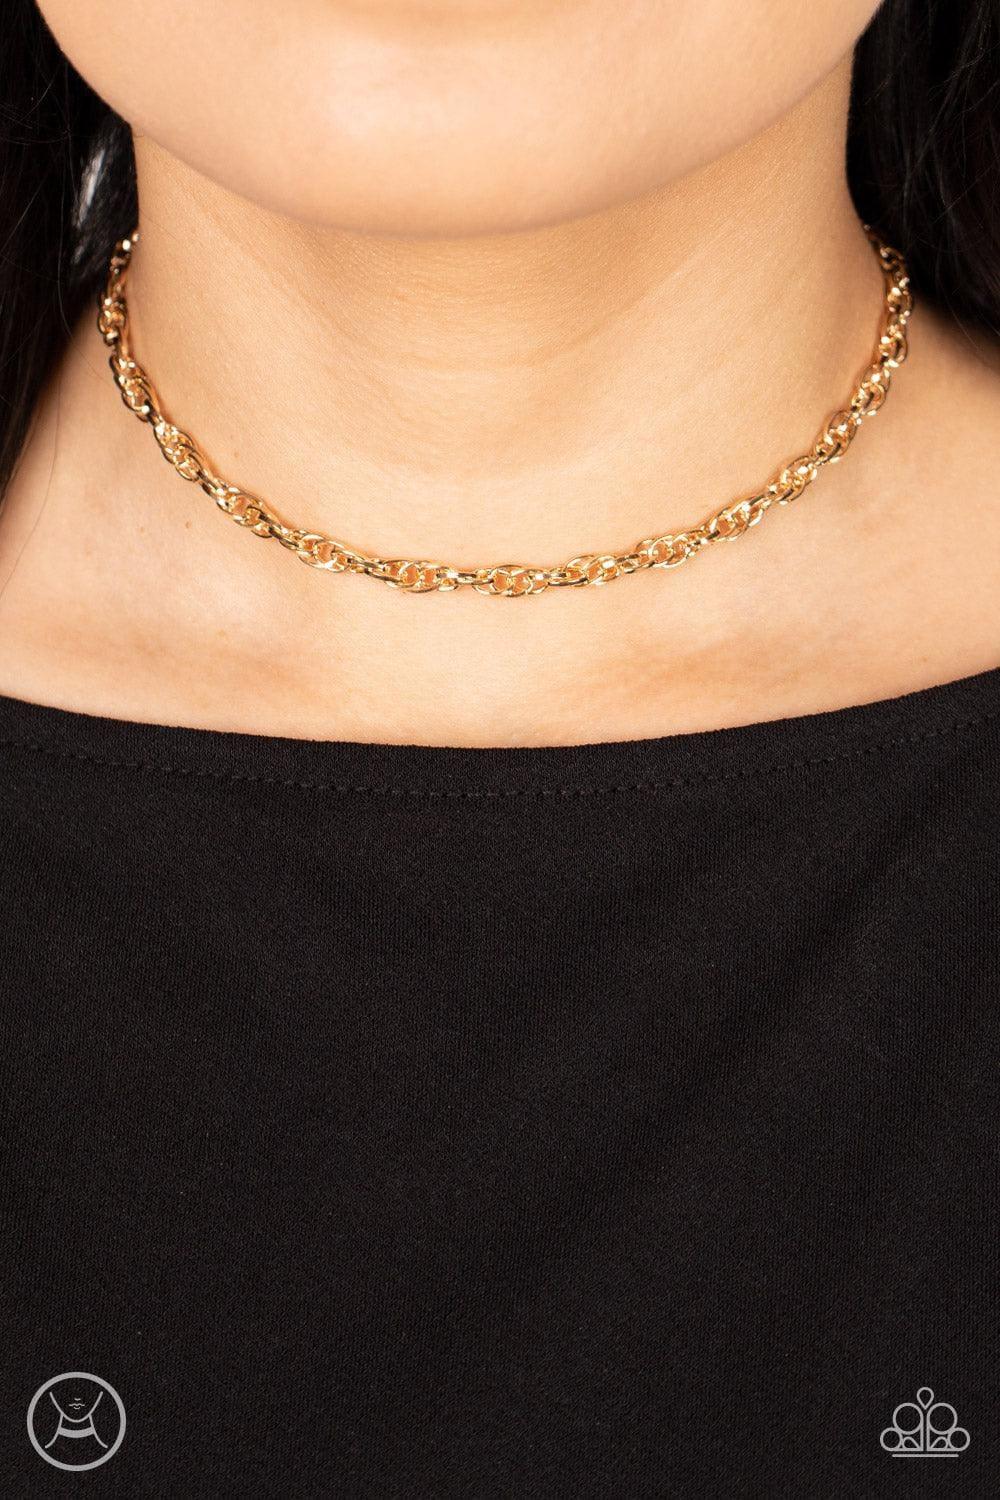 Paparazzi Accessories - Urban Underdog - Gold Choker Necklace - Bling by JessieK